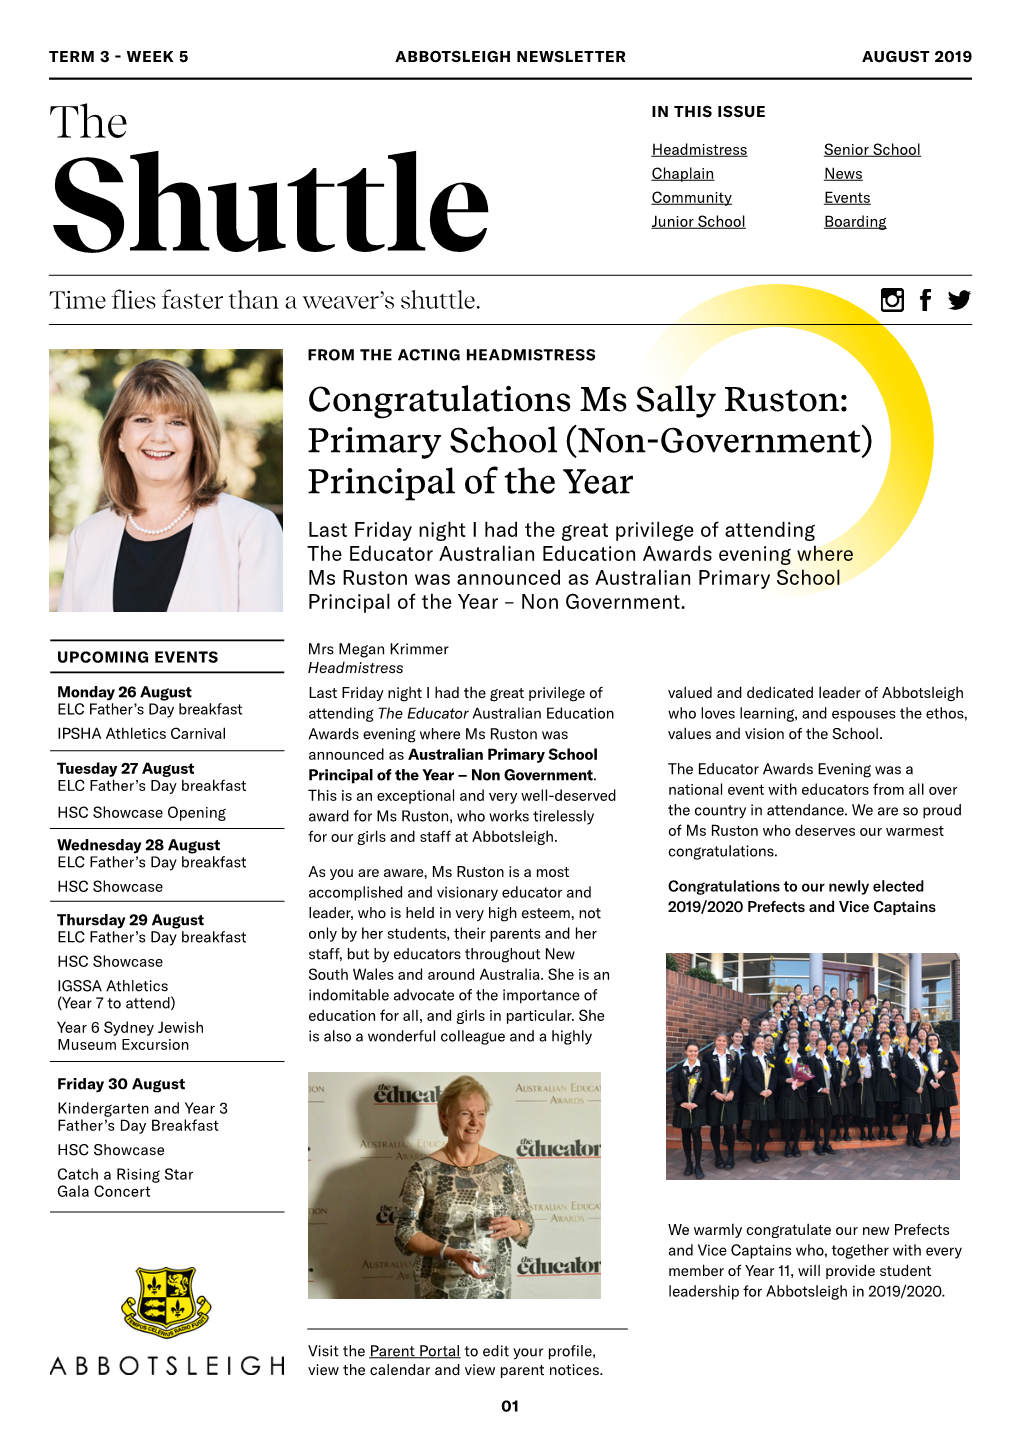 Congratulations Ms Sally Ruston: Primary School (Non-Government) Principal of the Year